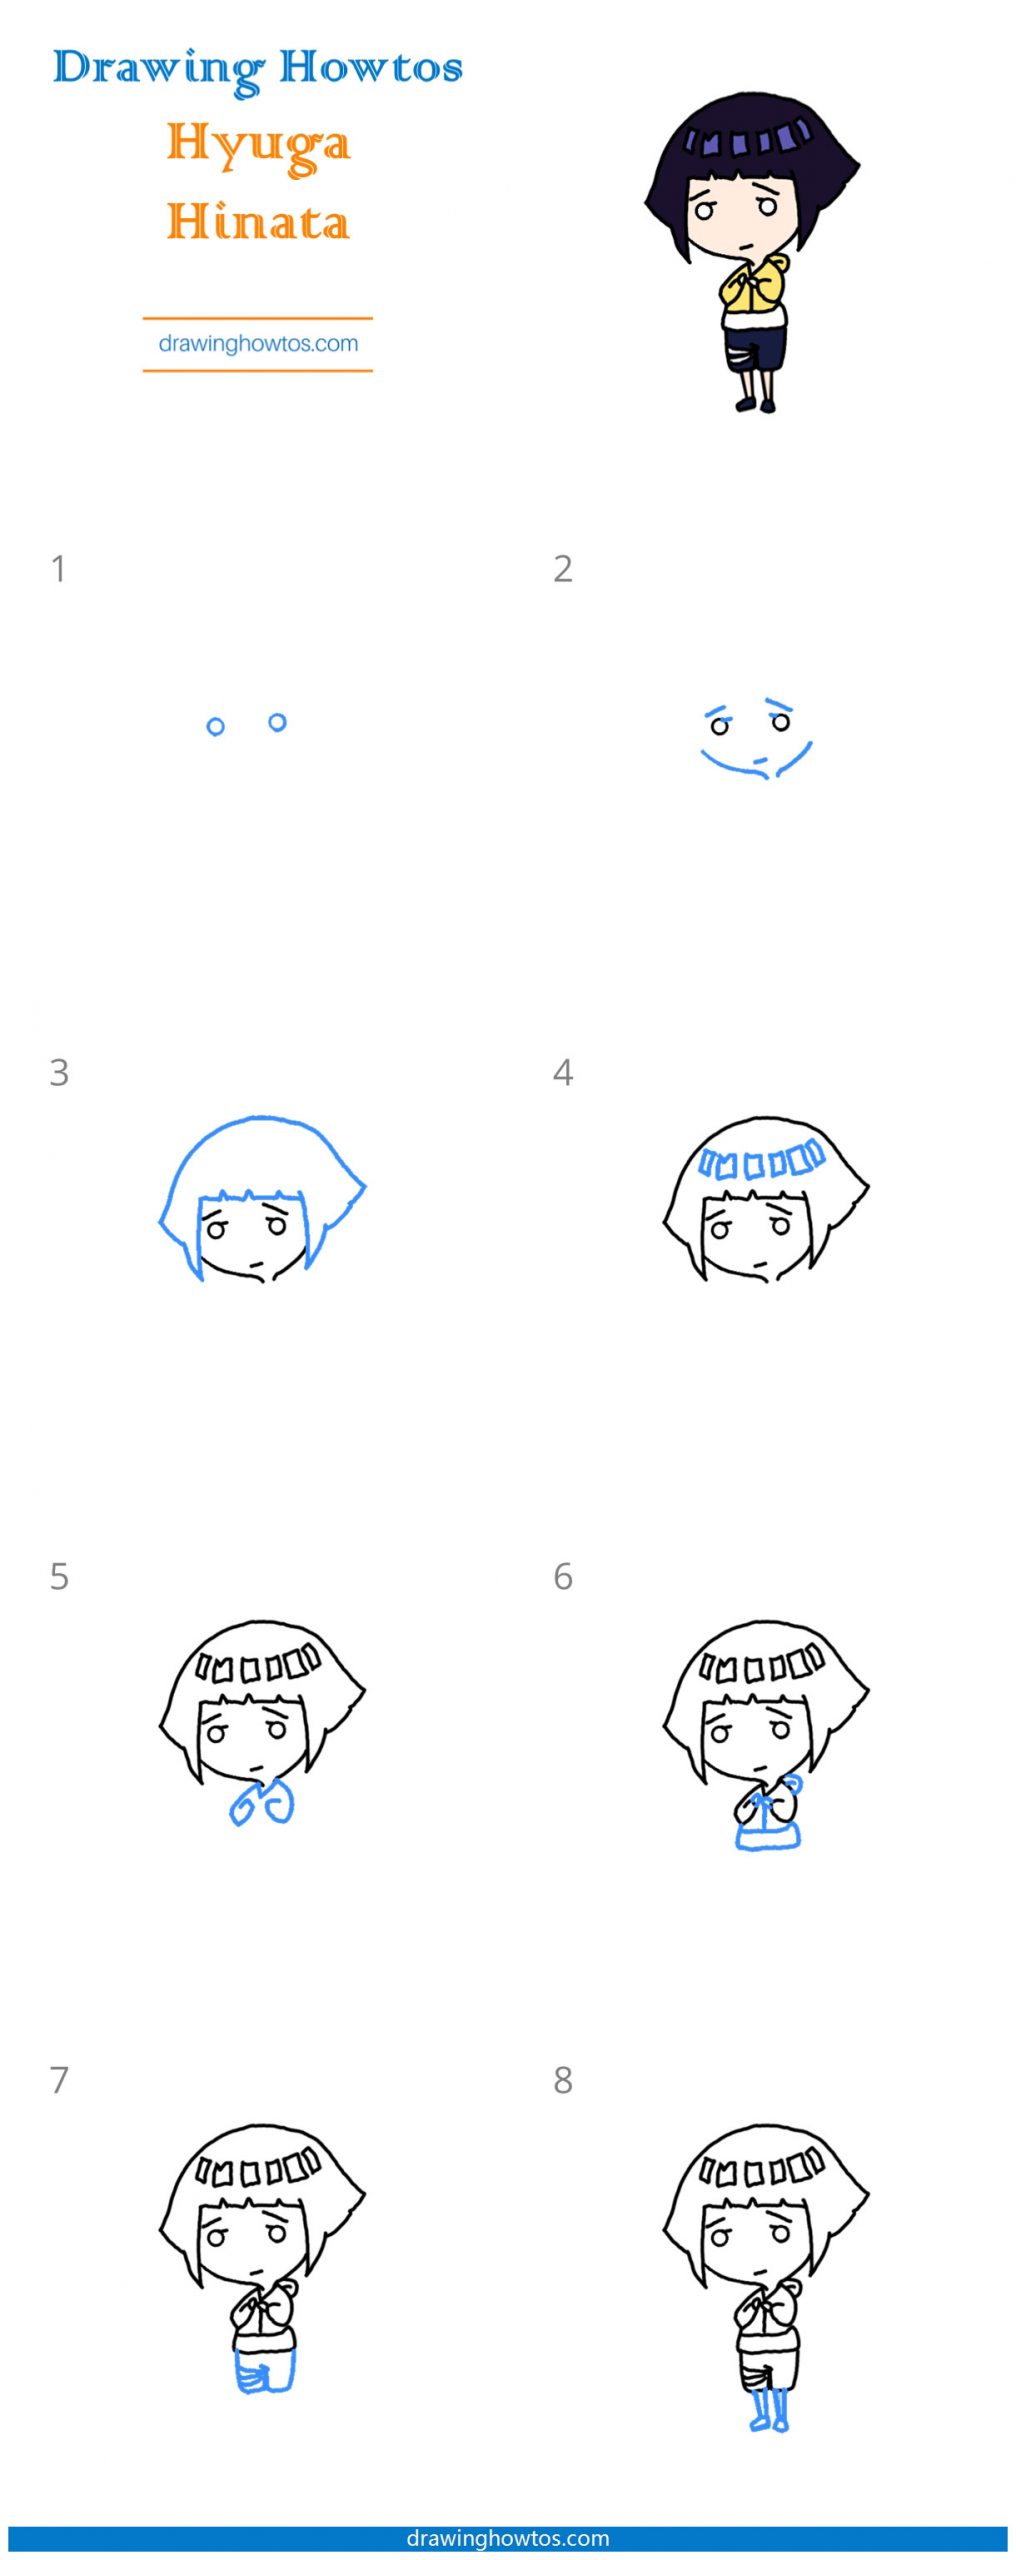 How to Draw Hyuga Hinata Step by Step